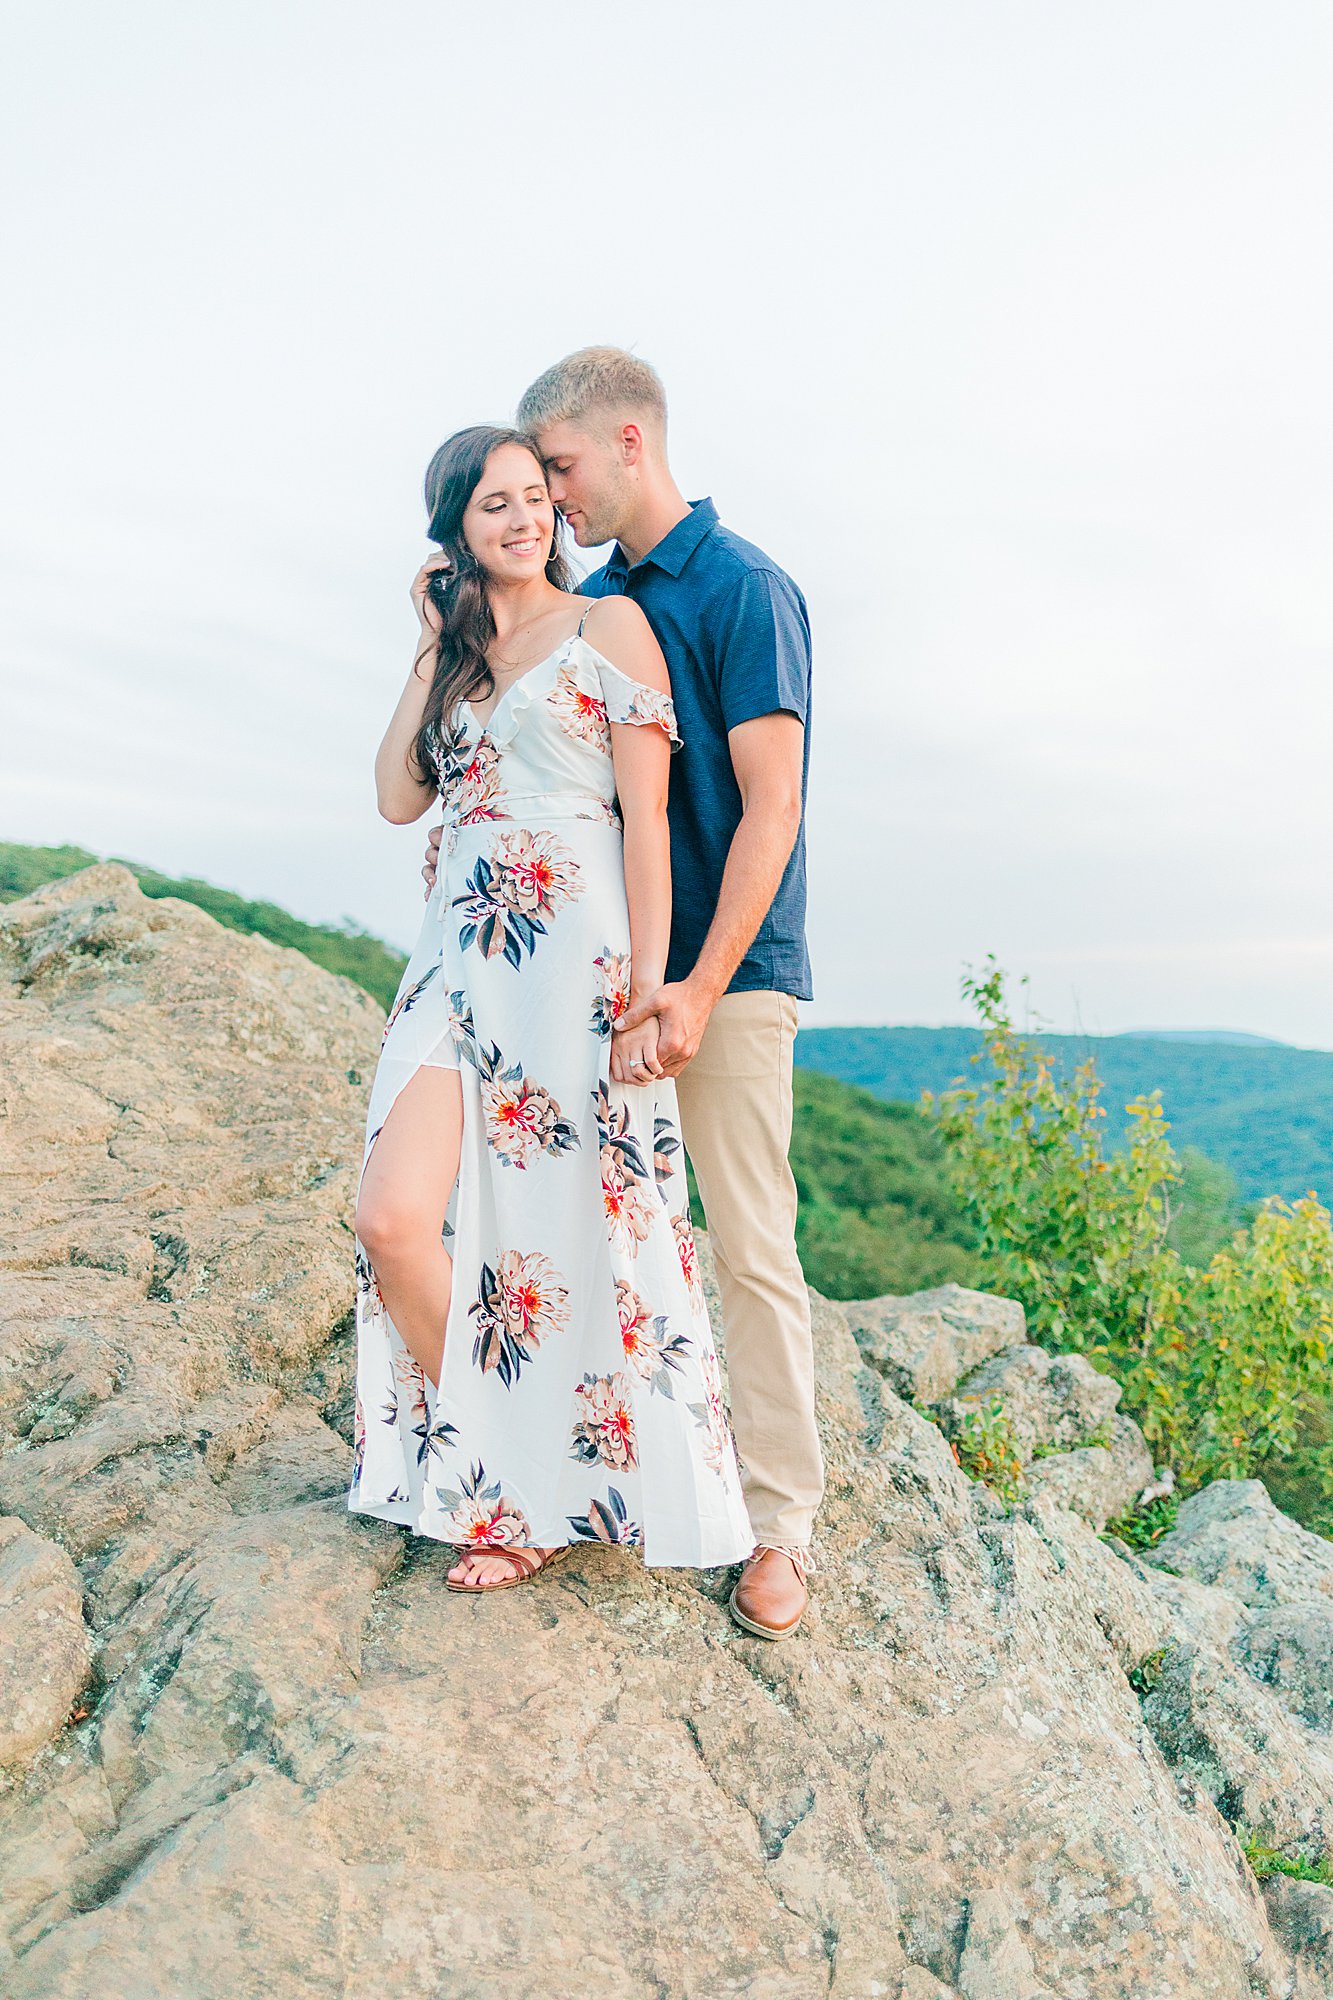 Engagement photos in Blue Ridge Mountains.